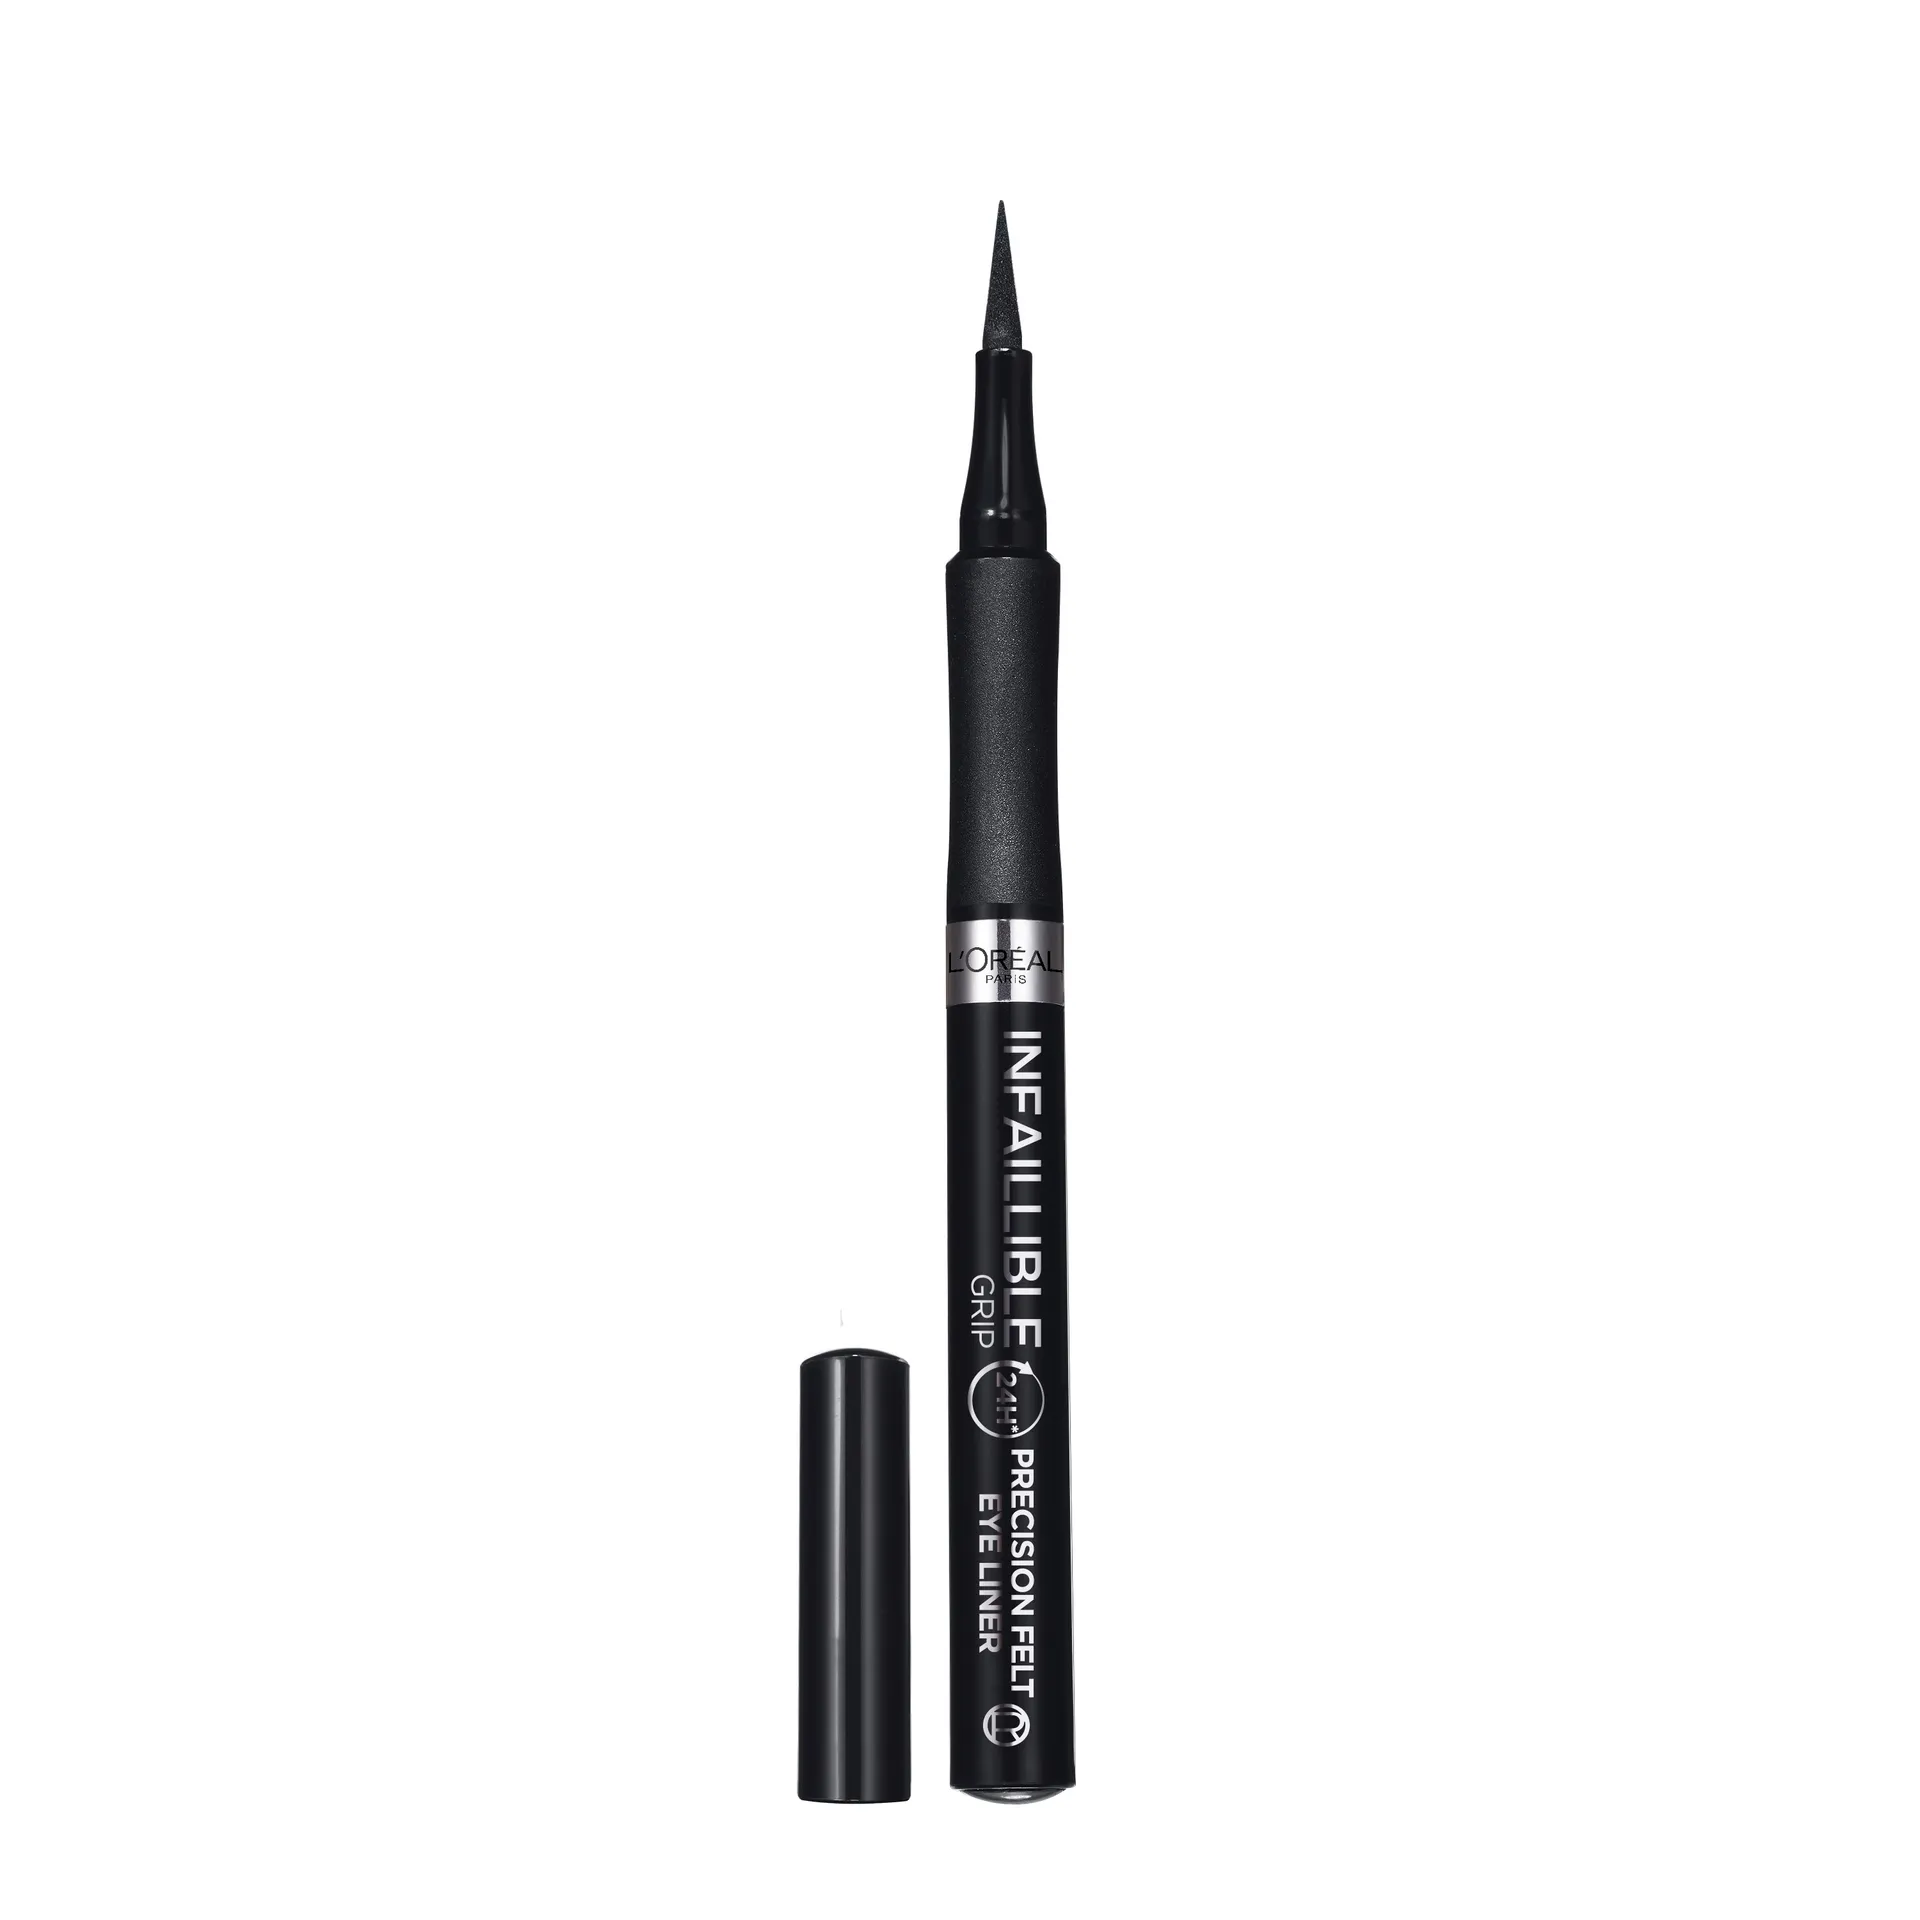 L'Oréal Paris Infaillible Grip 24H Precision Felt eyeliner 01 Black nestemäinen silmänrajausväri 1 kpl - 01 black - 1